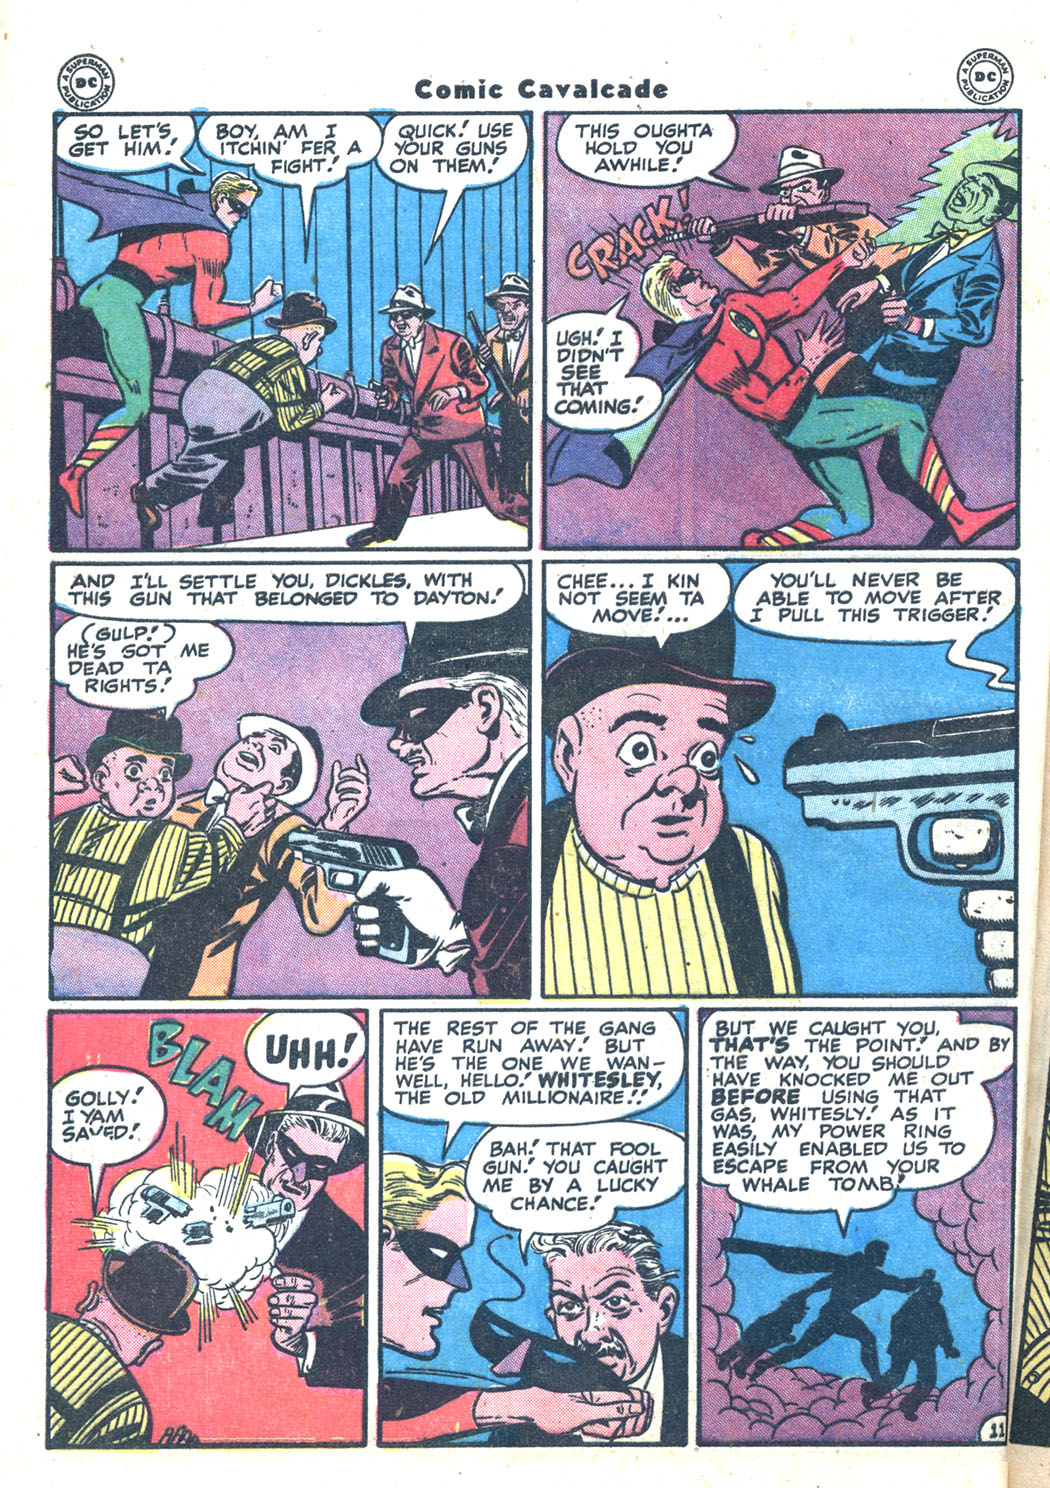 Comic Cavalcade issue 23 - Page 42